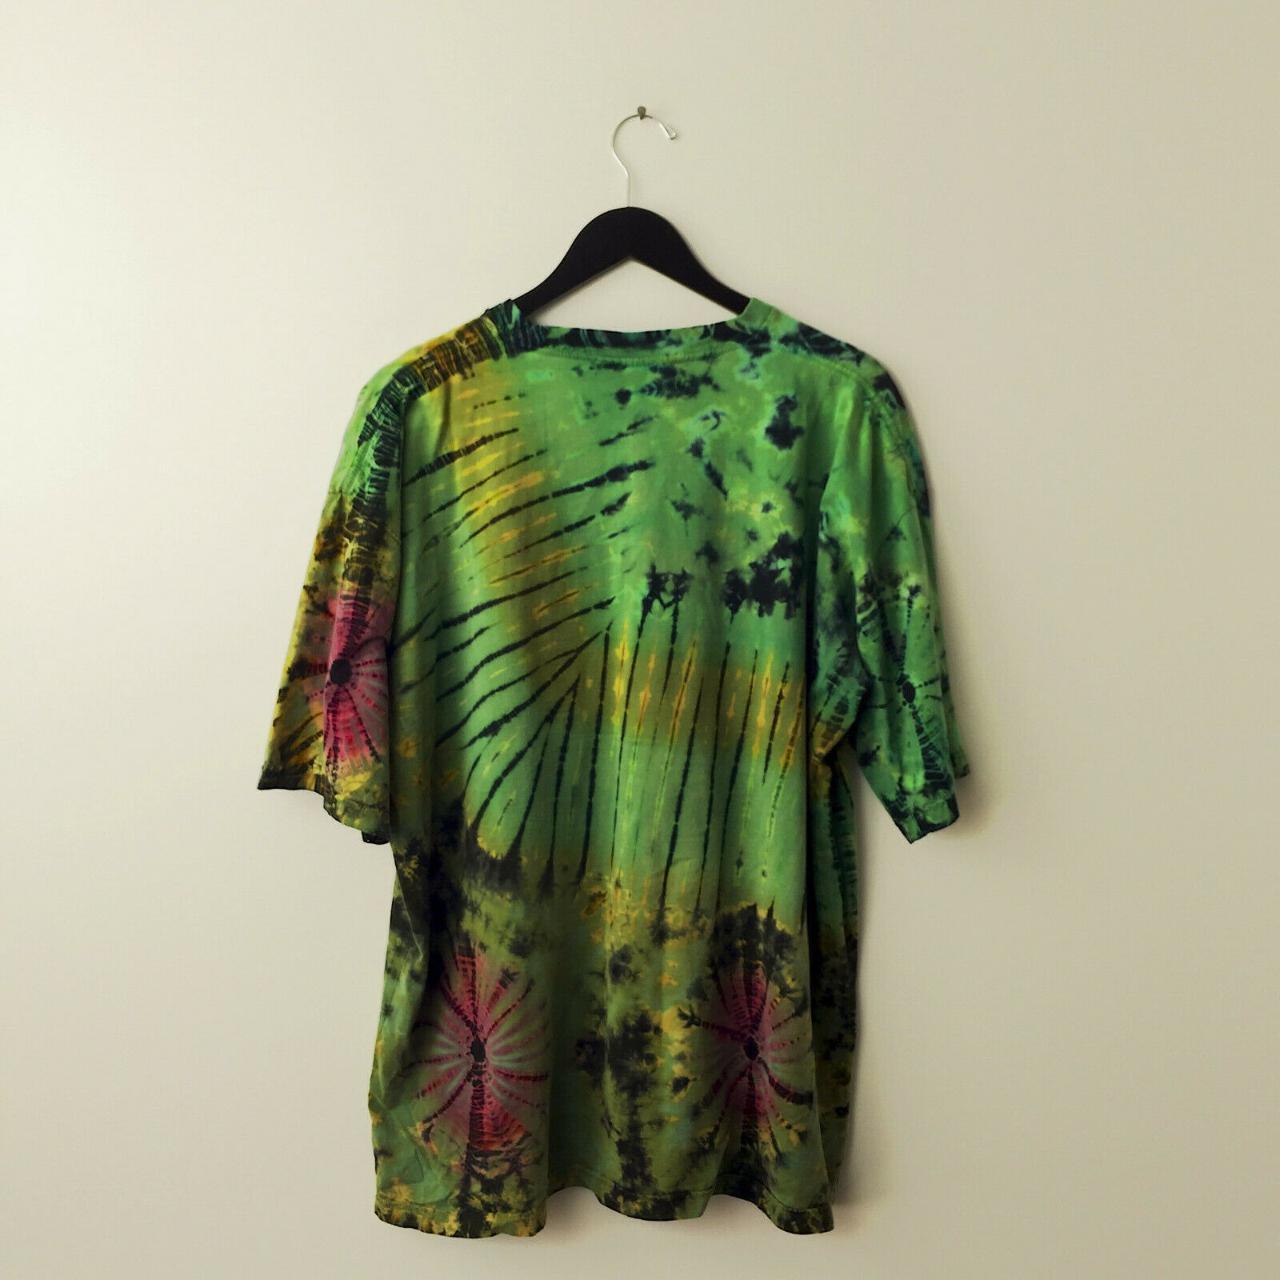 Product Image 3 - Tie Dye Tee Shirt Hippie